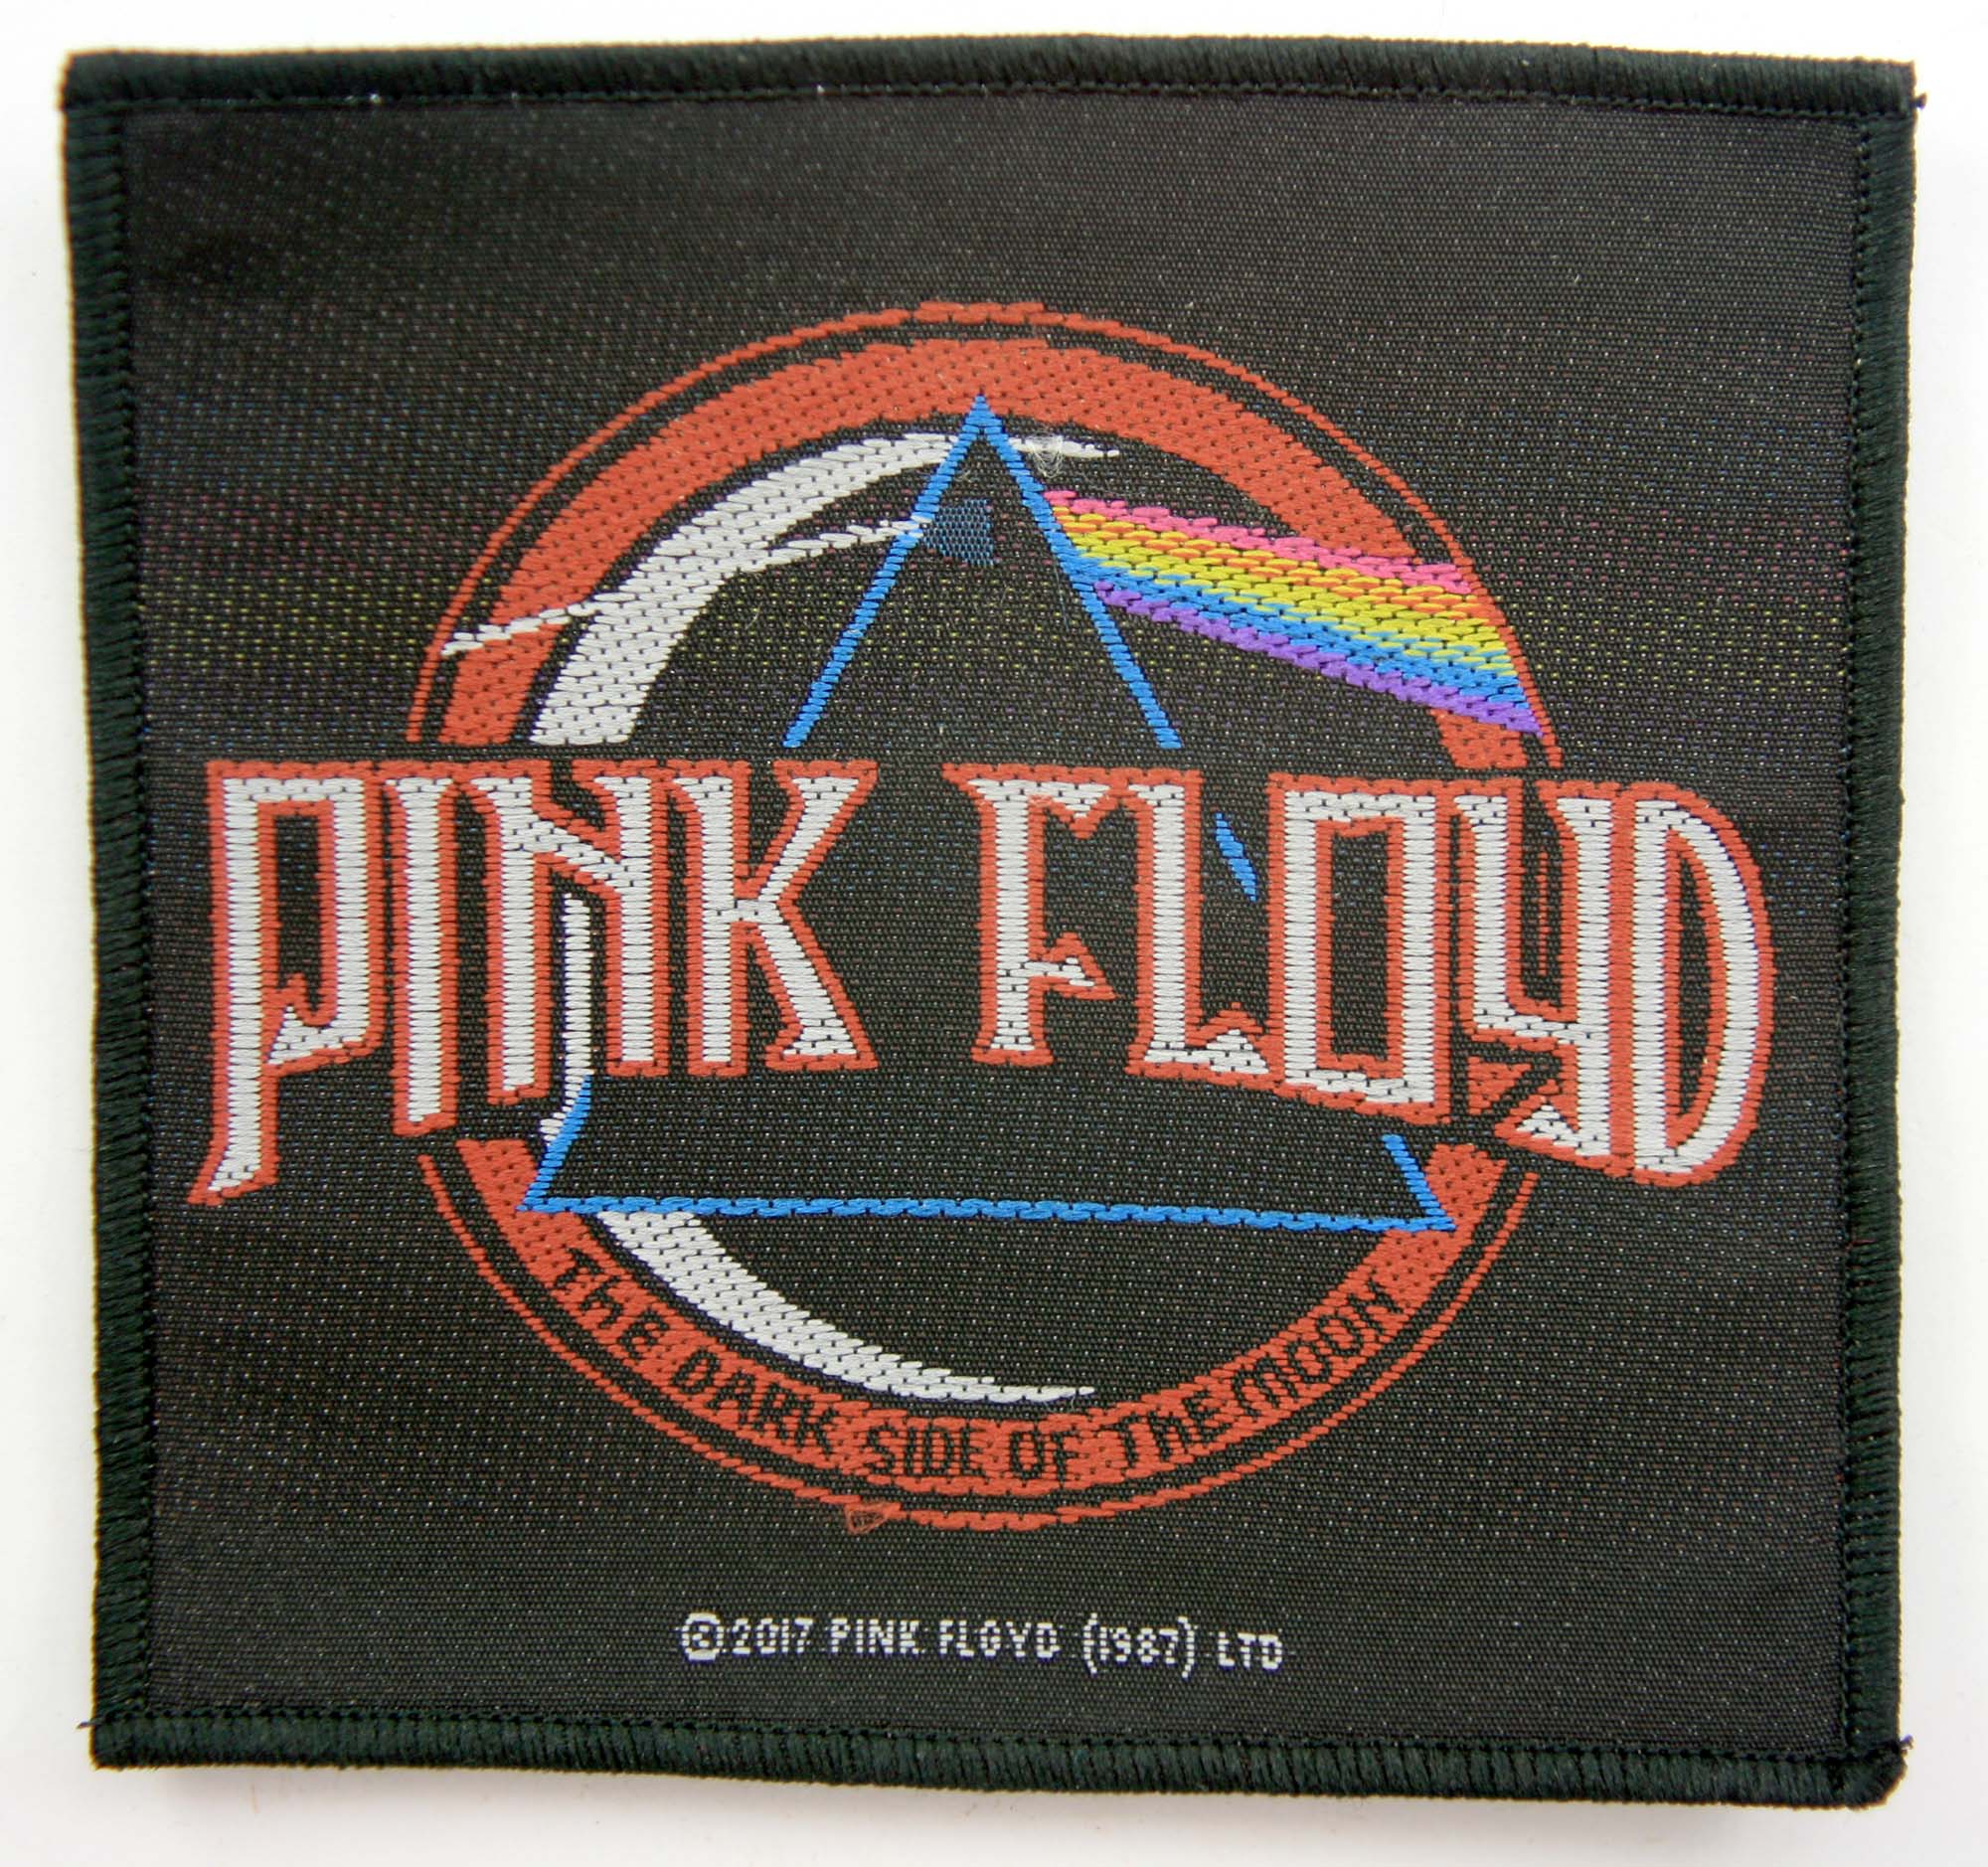 Pink Floyd Logo - Pink Floyd - Logo Dark Side of the Moon Woven Patch